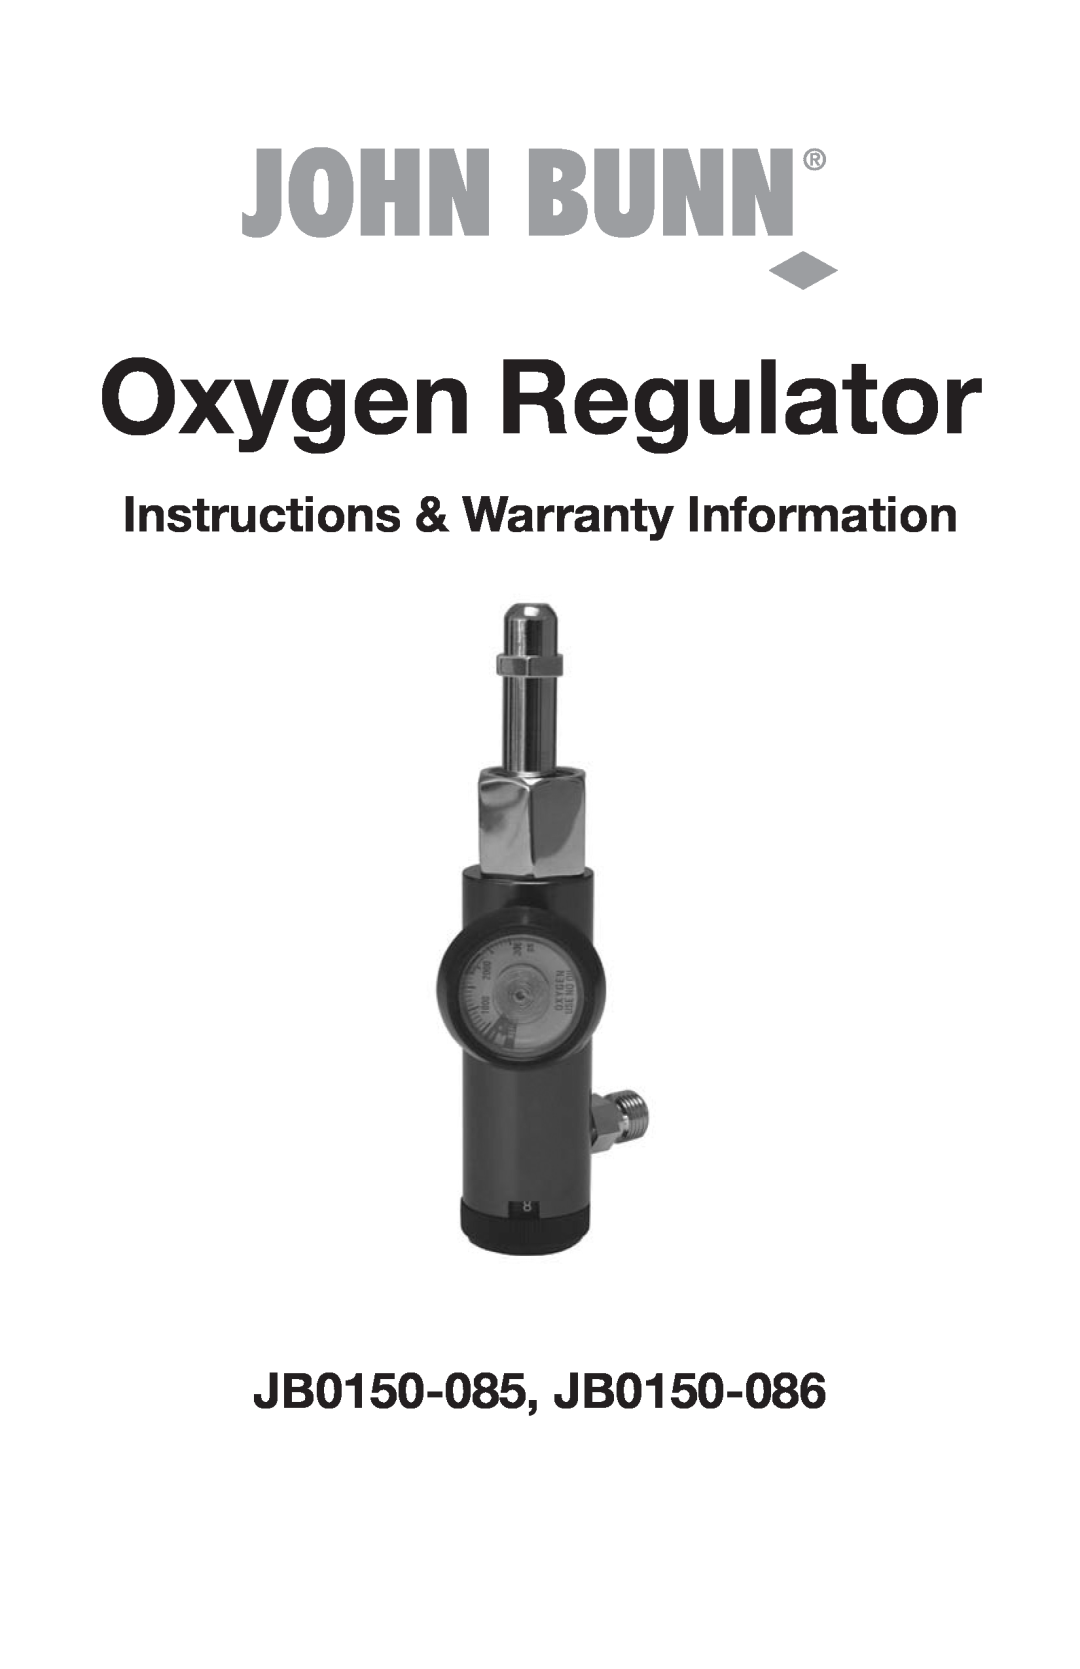 Graham Field warranty Oxygen Regulator, Instructions & Warranty Information, JB0150-085, JB0150-086 